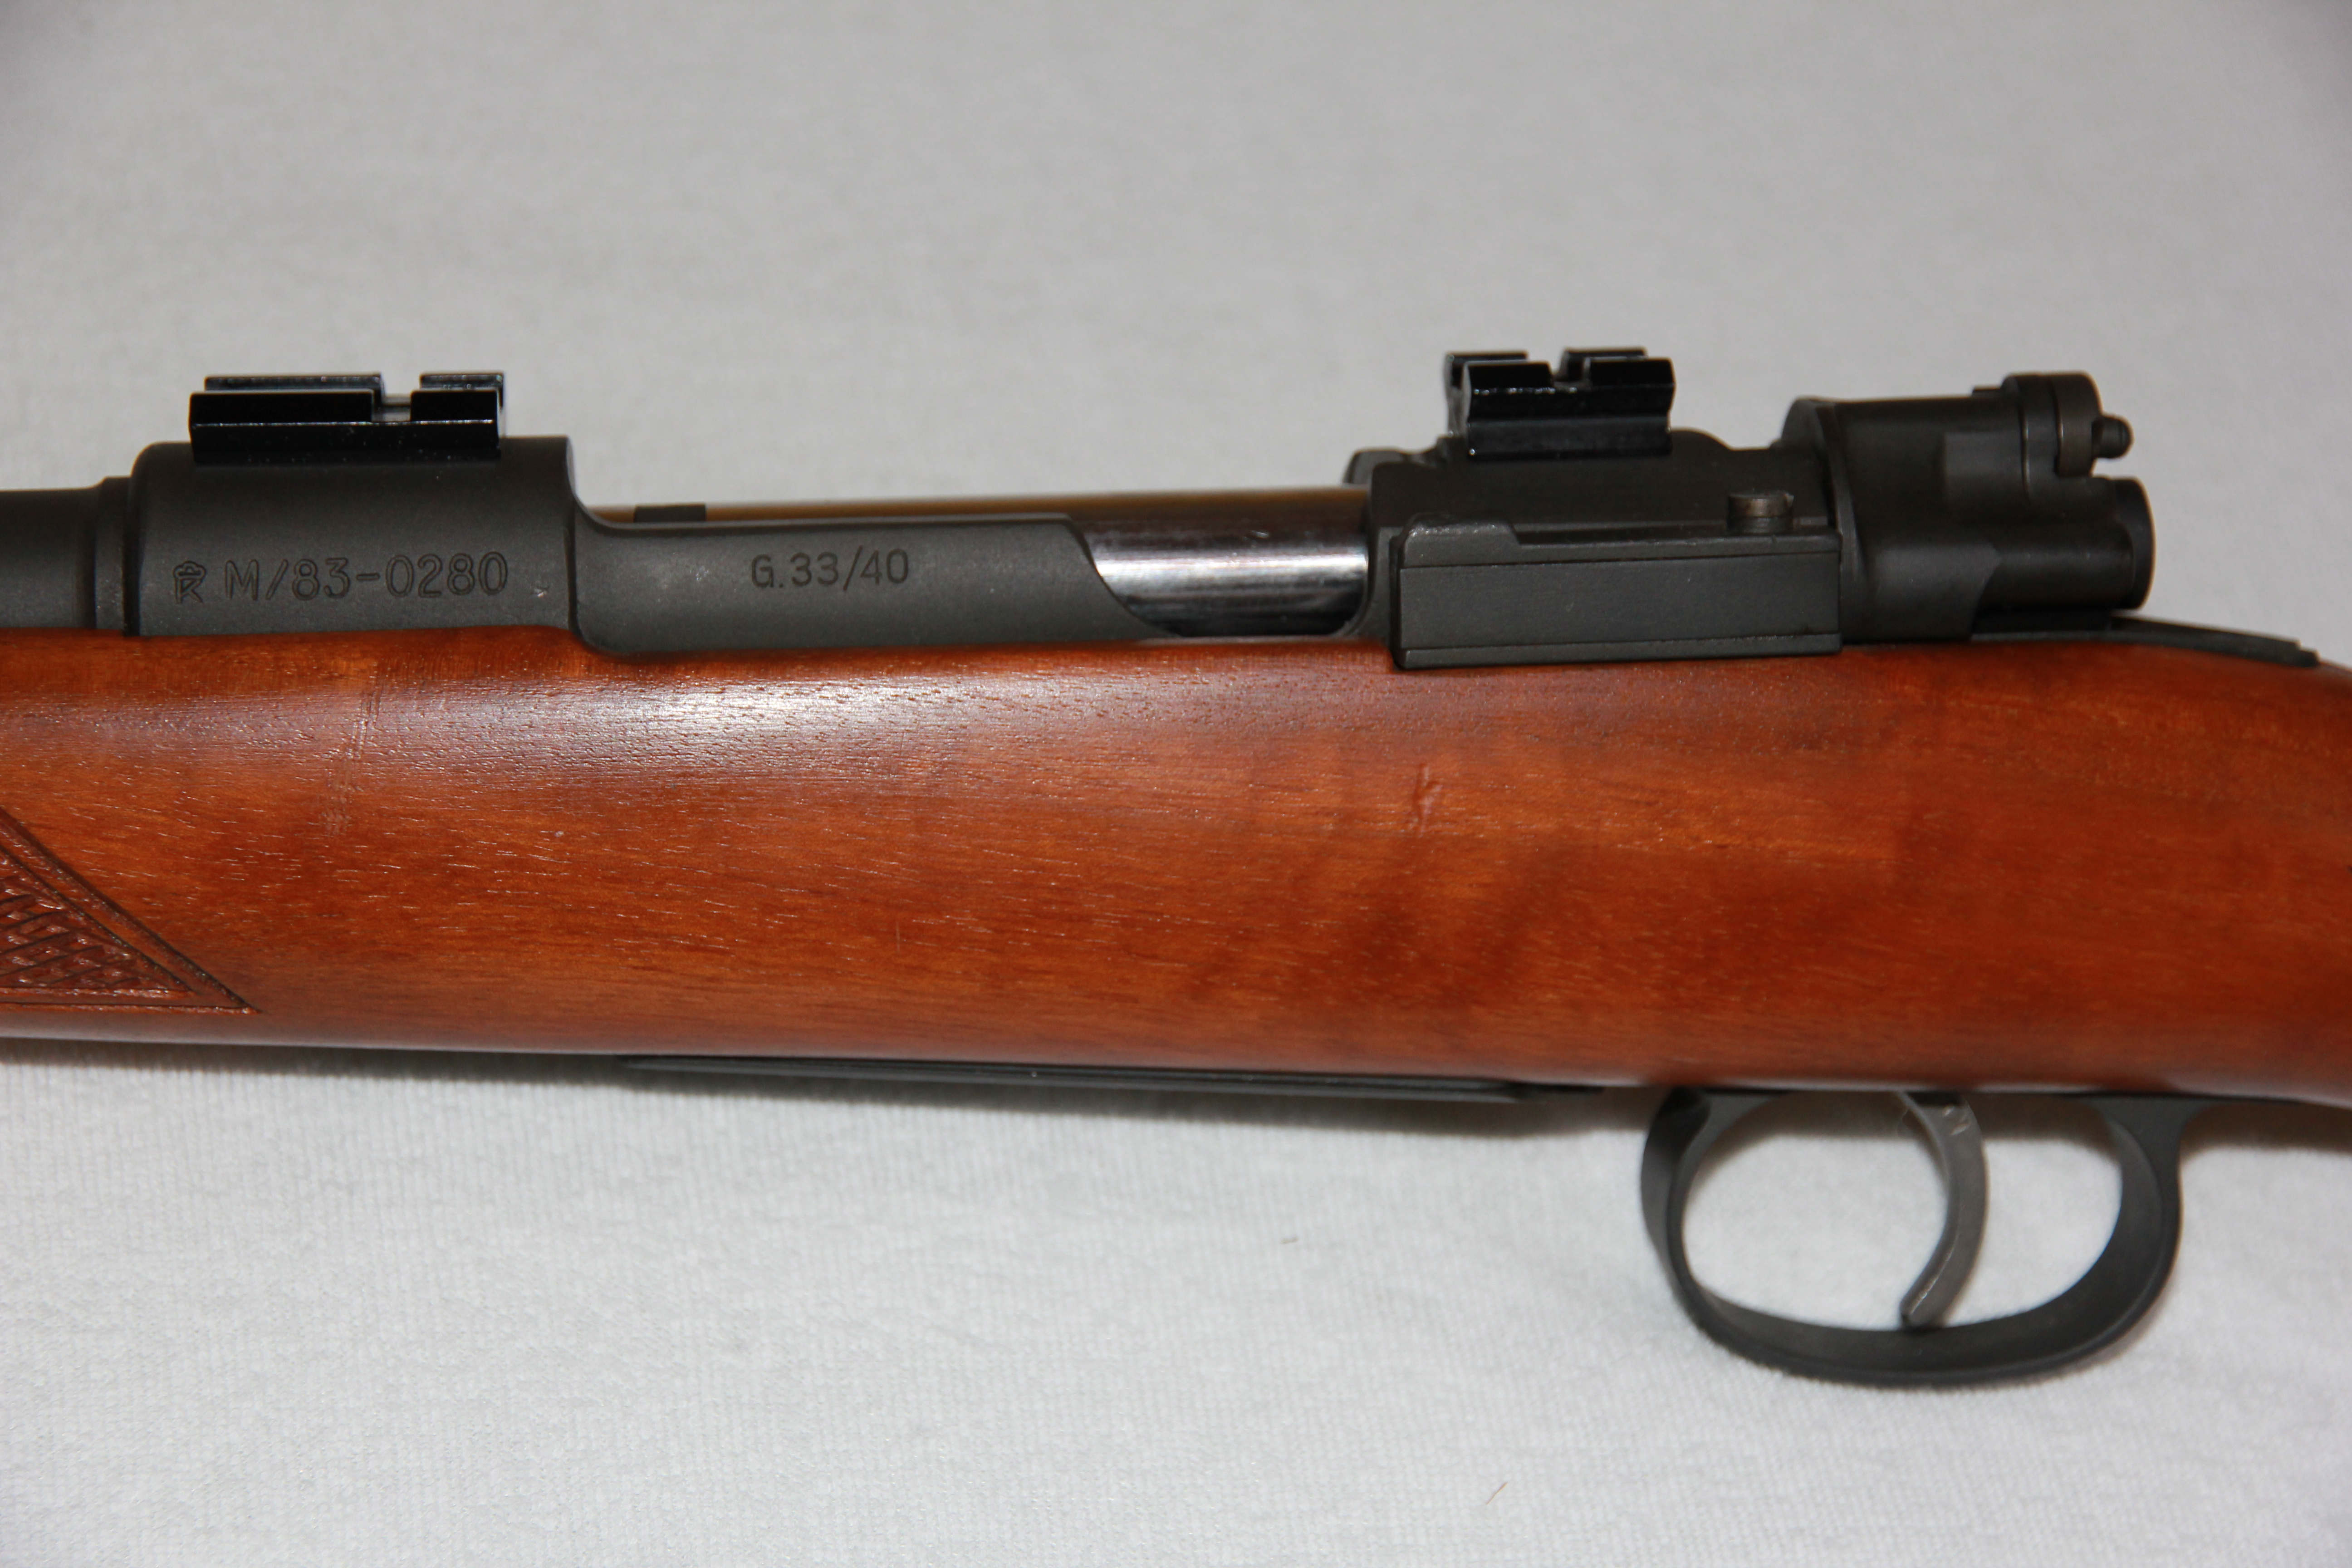 ./guns/rifle/bilder/Rifle-Kongsberg-Mauser-M83-0280-5.JPG